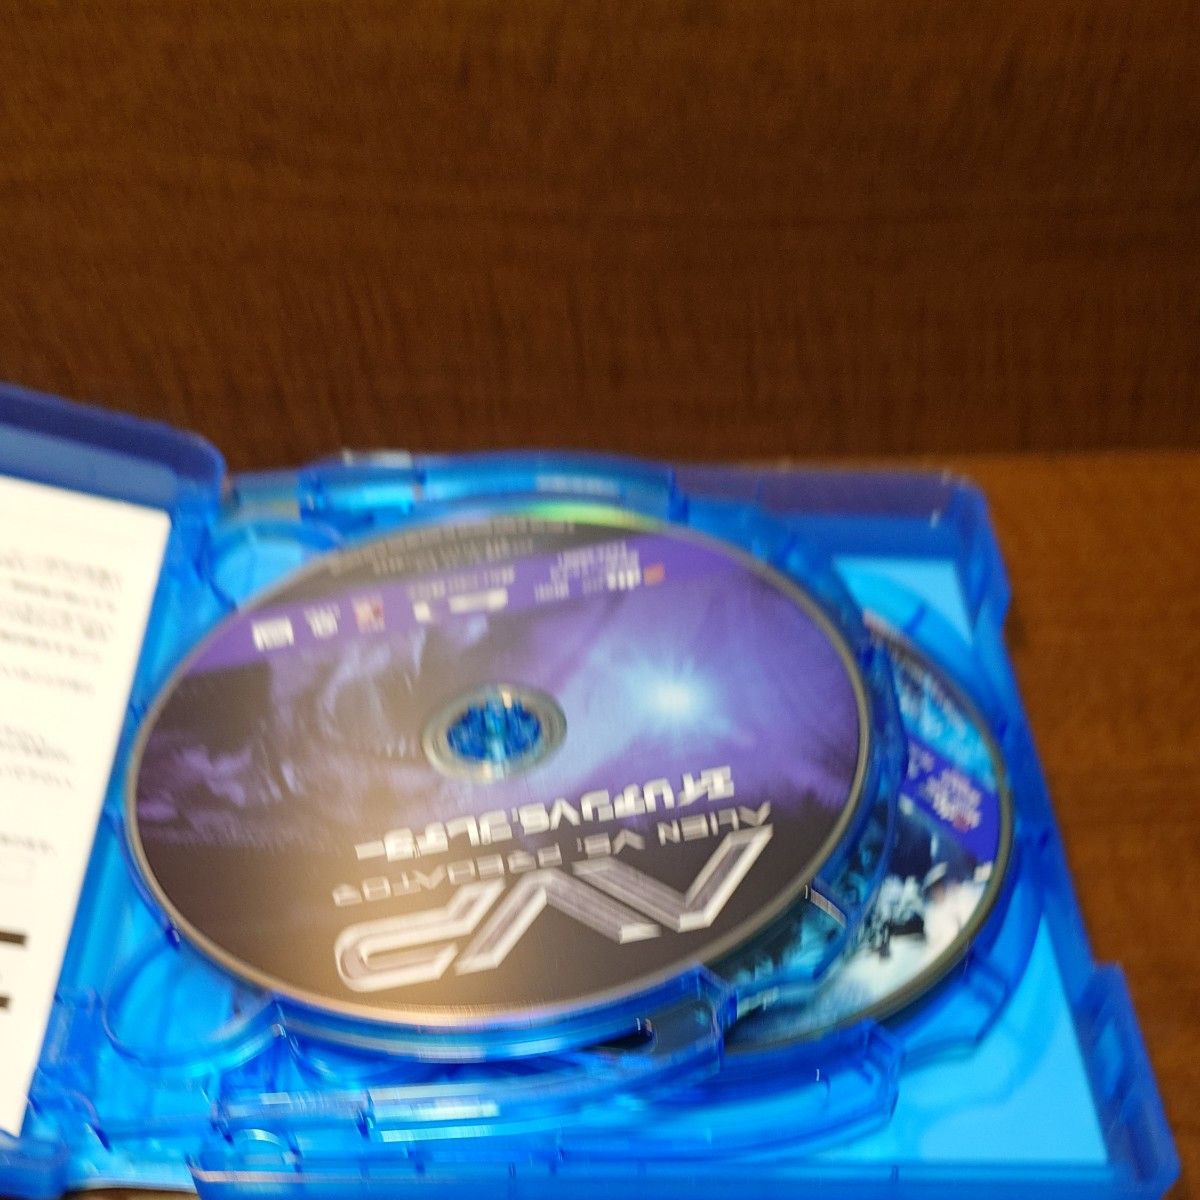 AVP&プレデター ブルーレイBOX (5枚組)  Blu-ray ブルーレイ